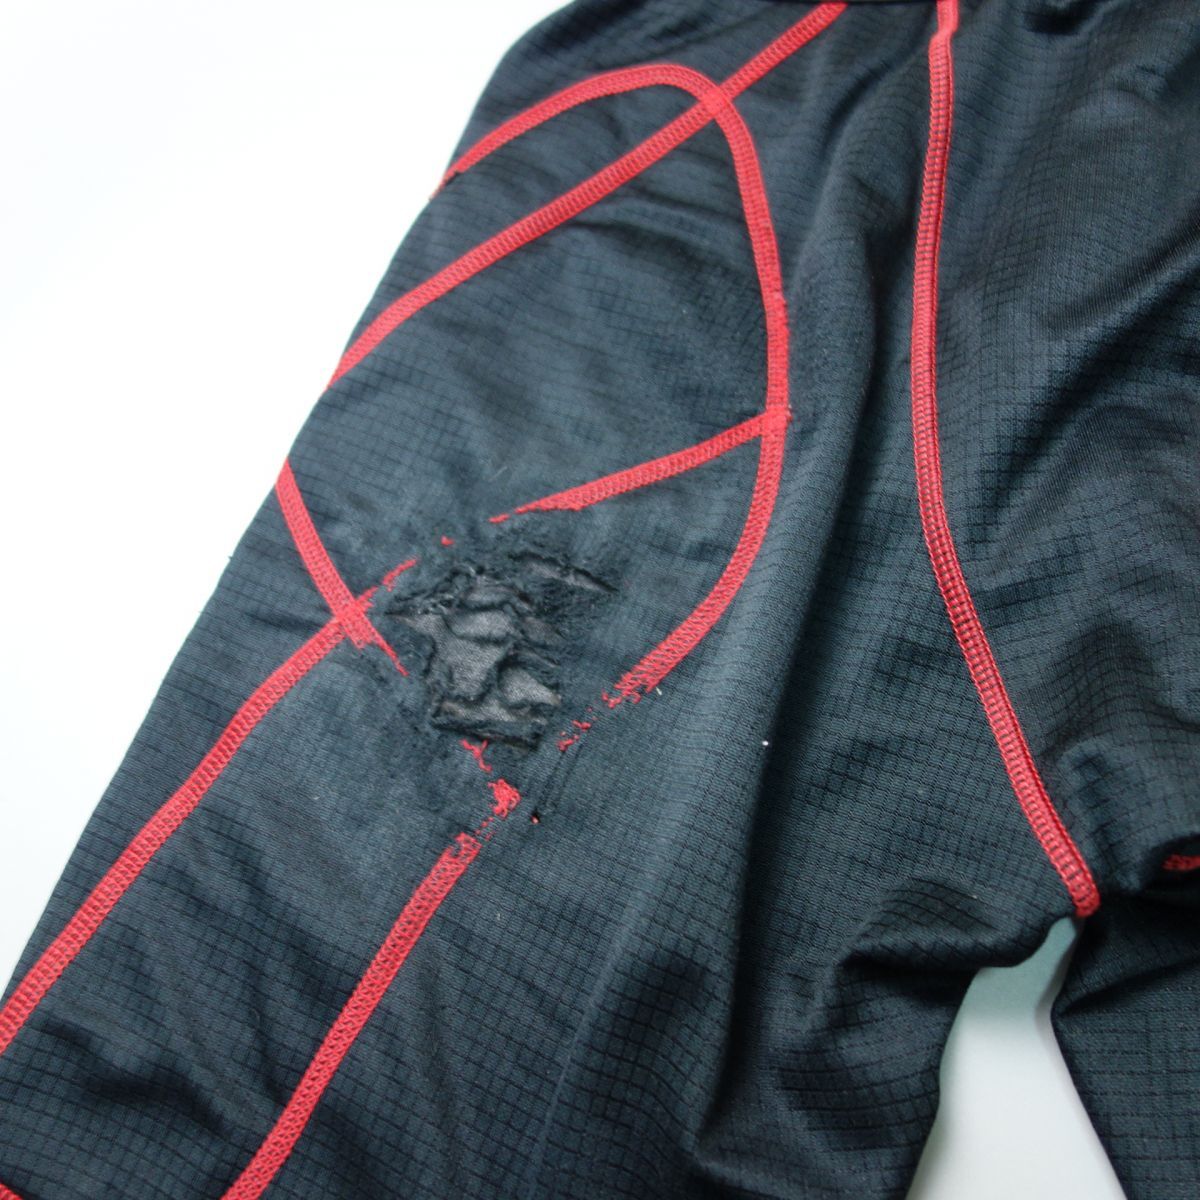 7 point set sale Mizuno tigola Asics Under Armor compressor spats tights running sport wear 